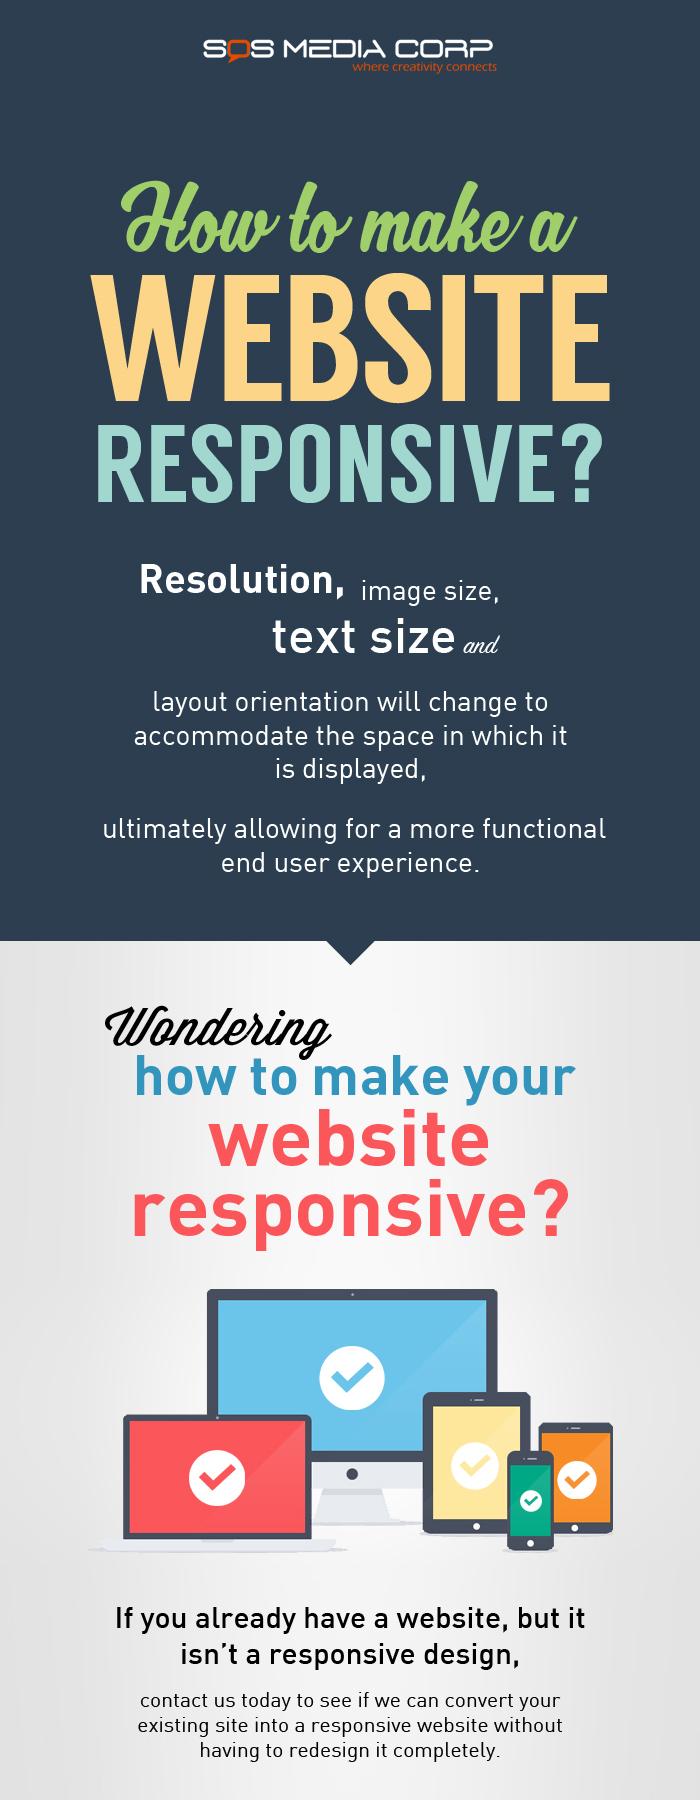 How to Make a Website Responsive?